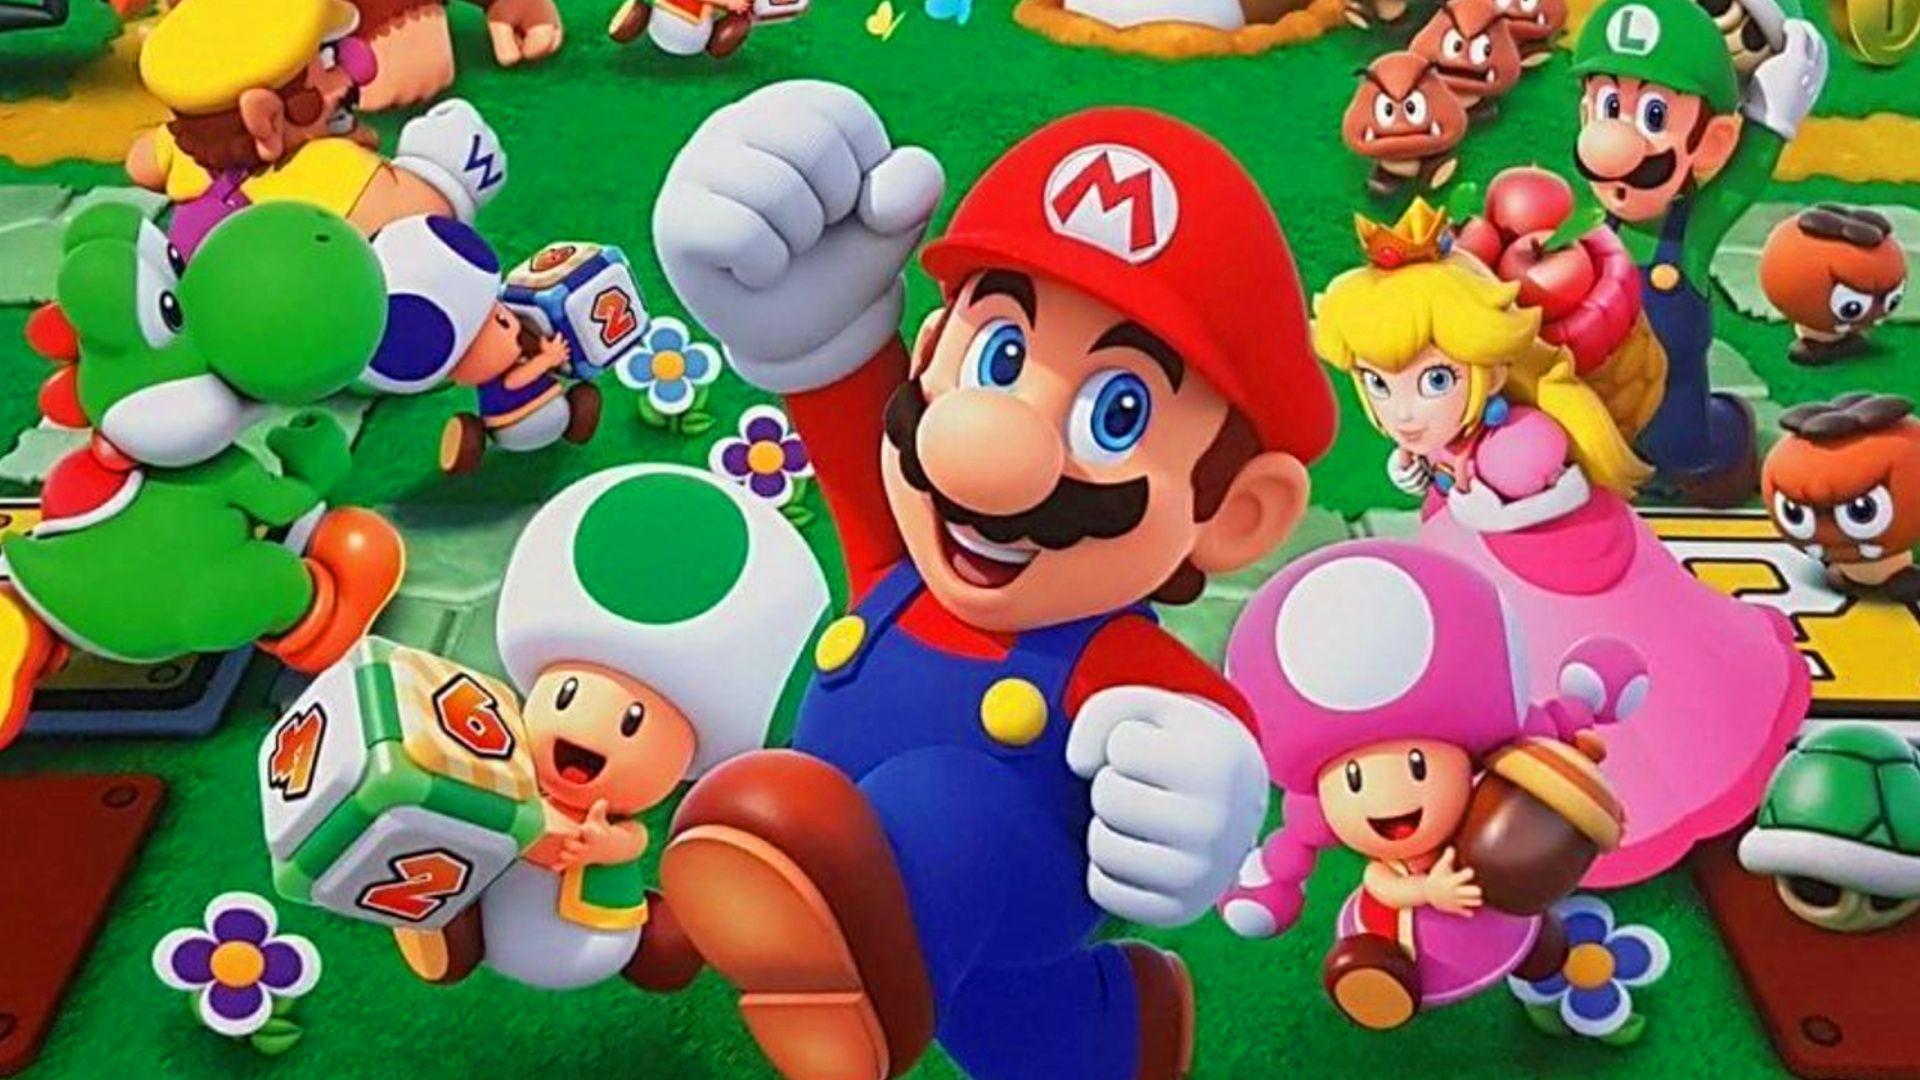 Mario игры 3. Nintendo Switch Марио пати. Nintendo Wii u Mario Party 10. Nintendo 3ds Mario Party. Mario Party: Star Rush [3ds].